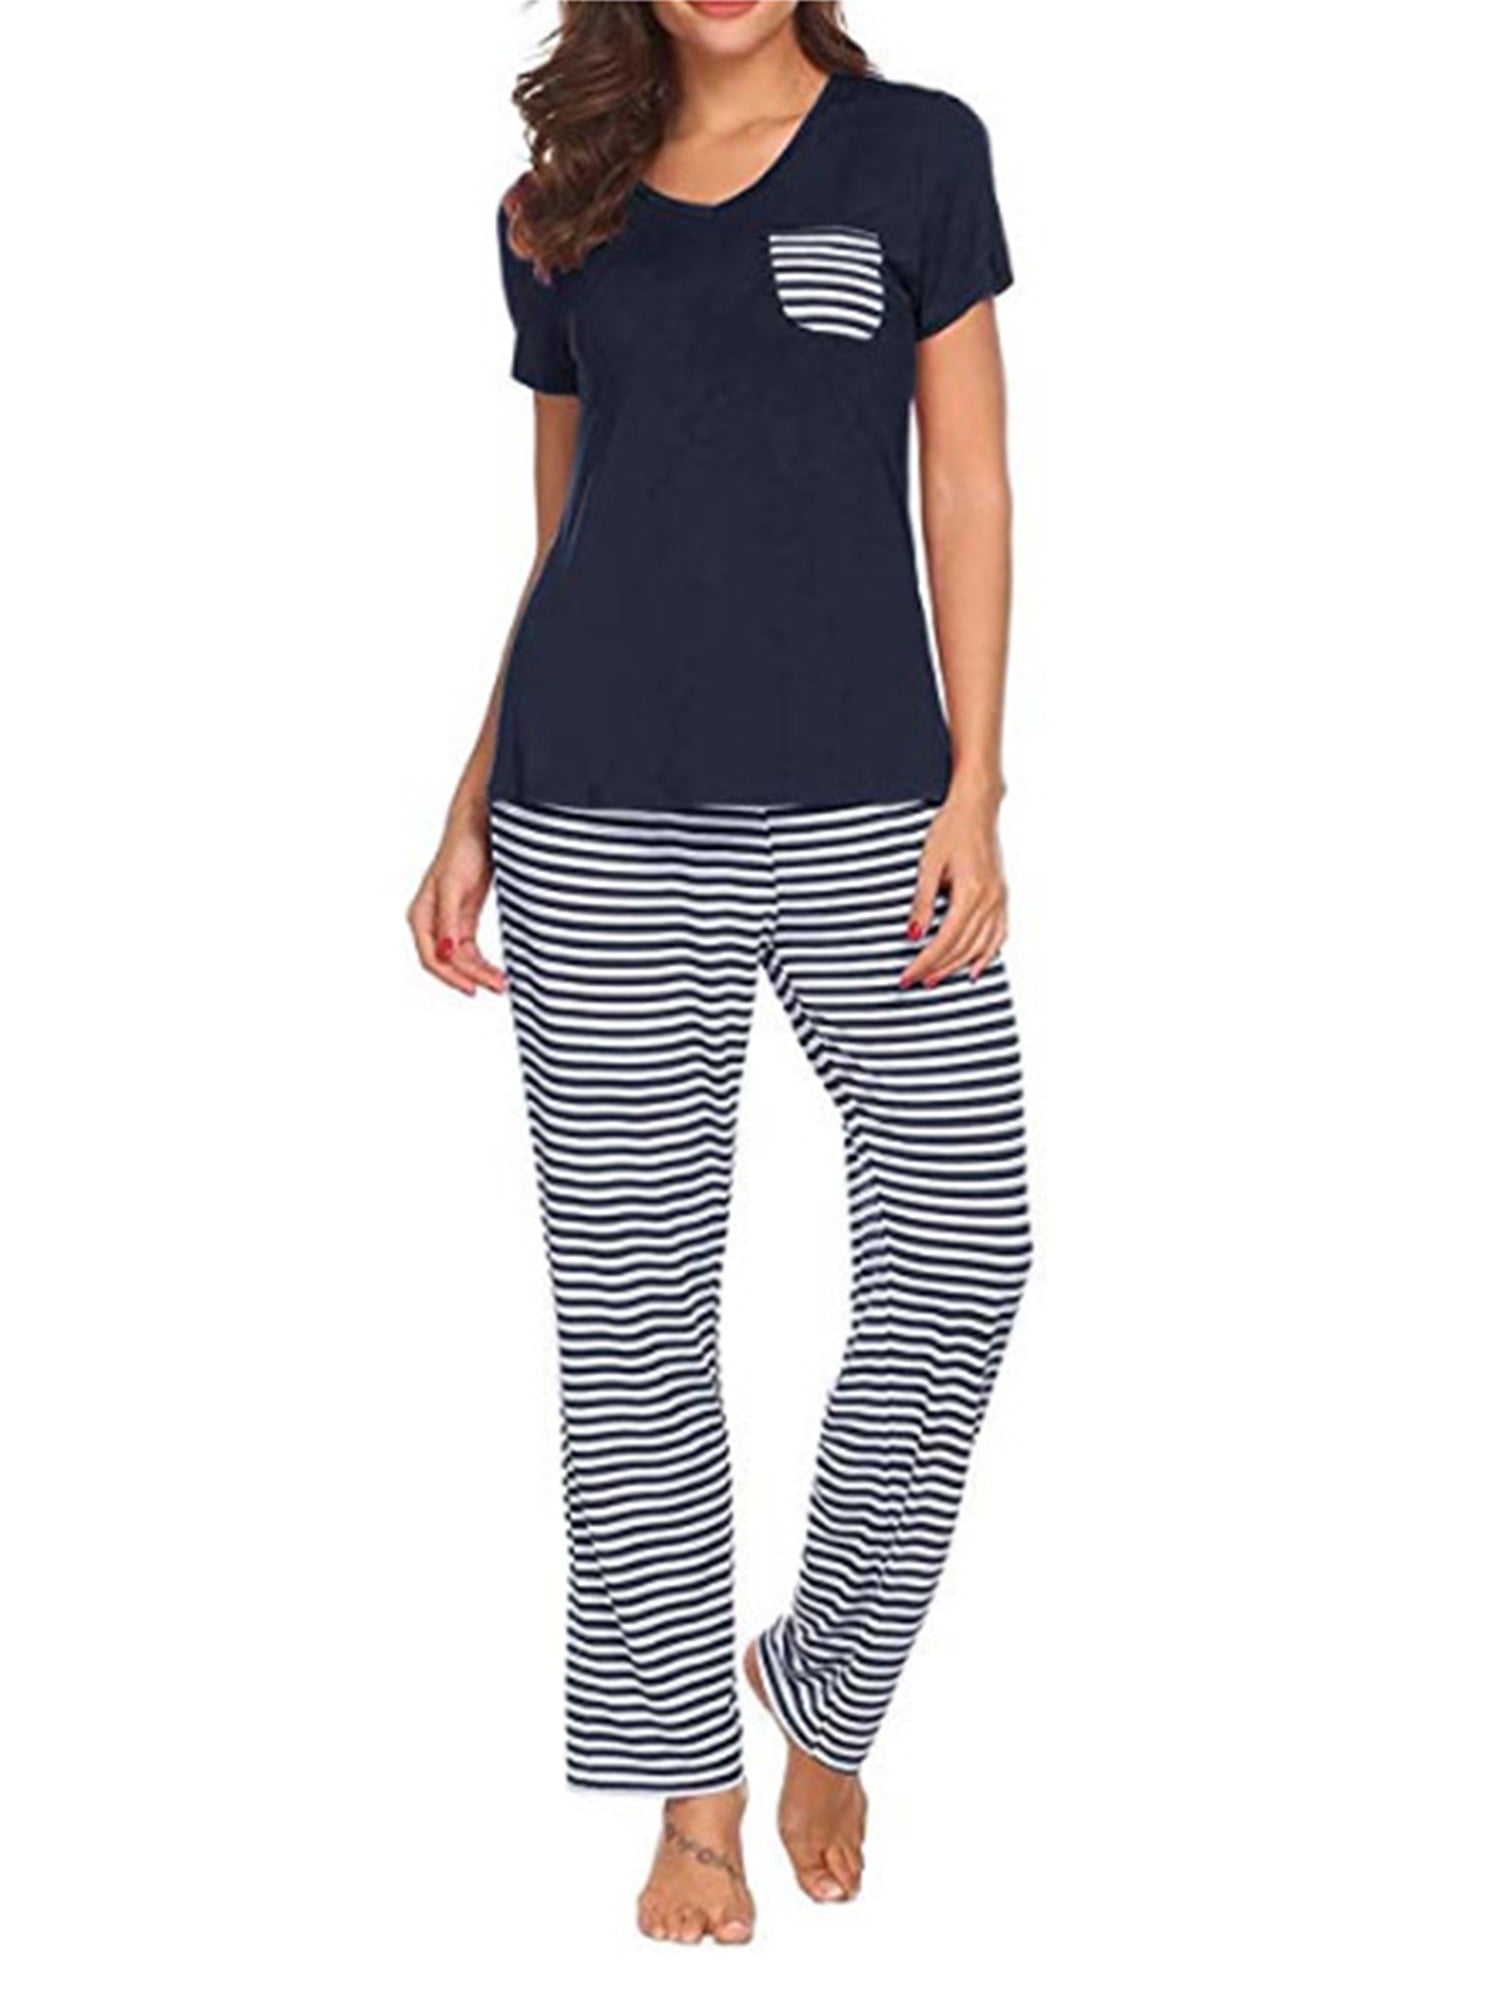 Women’s Pajama Set Sleepwear Tops with Capri Pants Casual and Fun Prints Pajama Sets